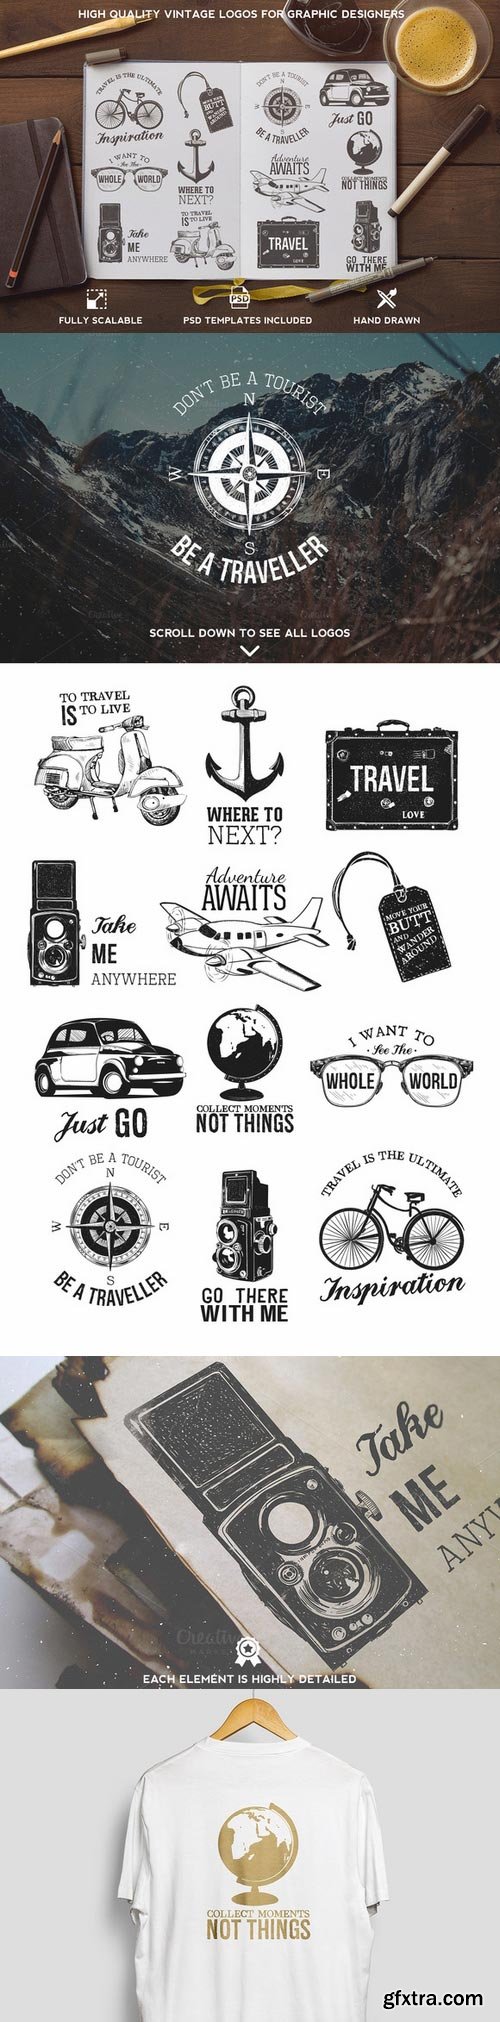 CM - Inspirational Travel Logos 311807